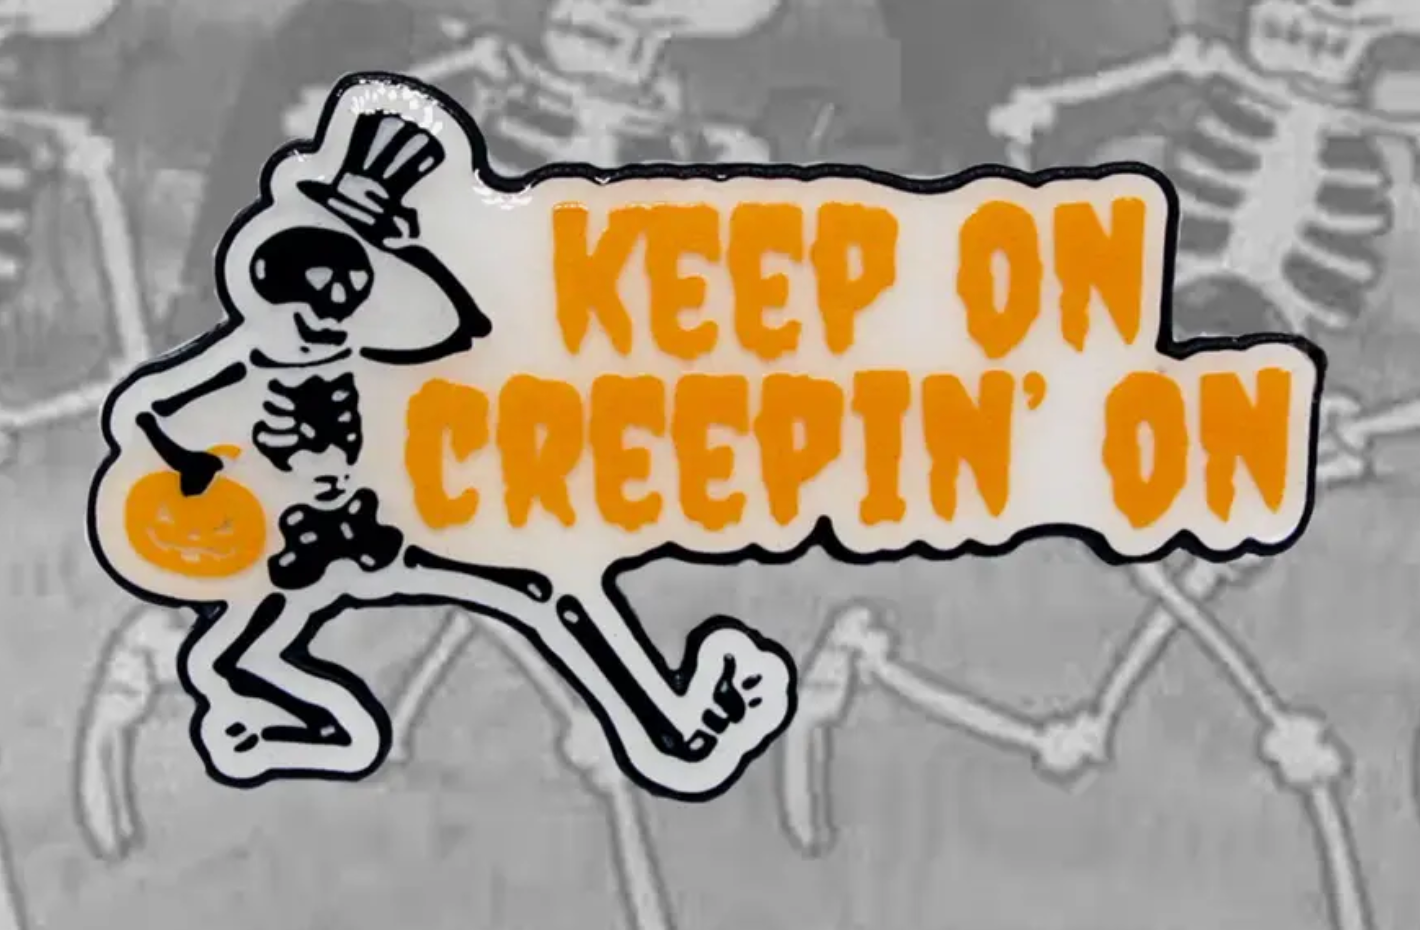 Keep On Creepin' On Skeleton Pin